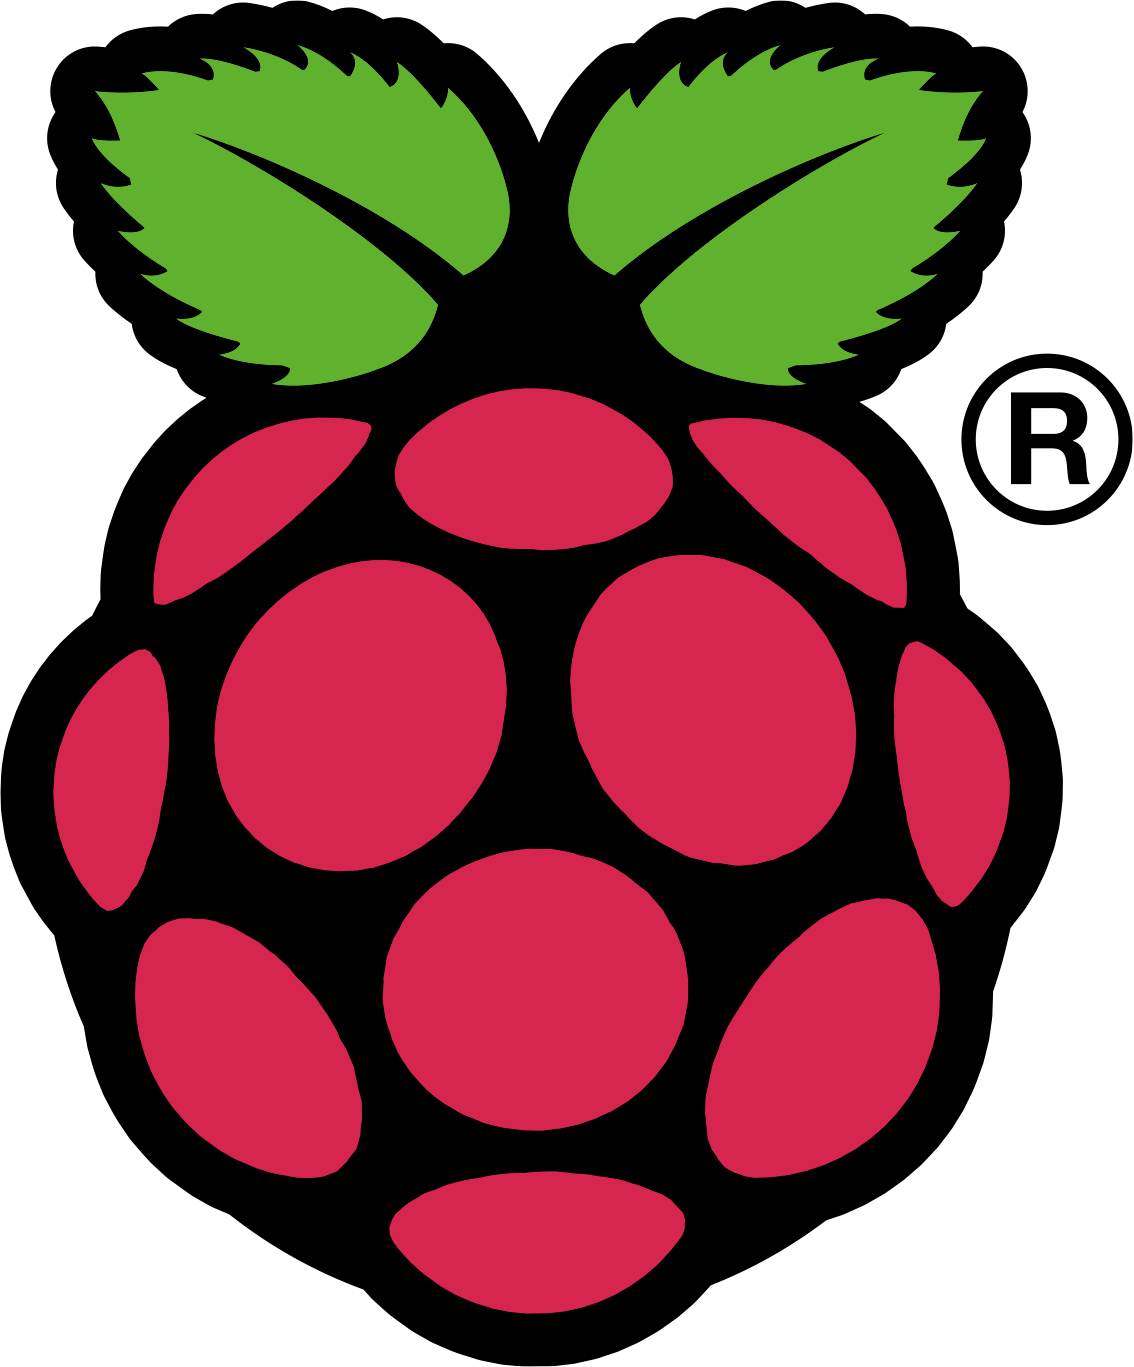 Raspberry Pi is a trademark of the Raspberry Pi Foundation